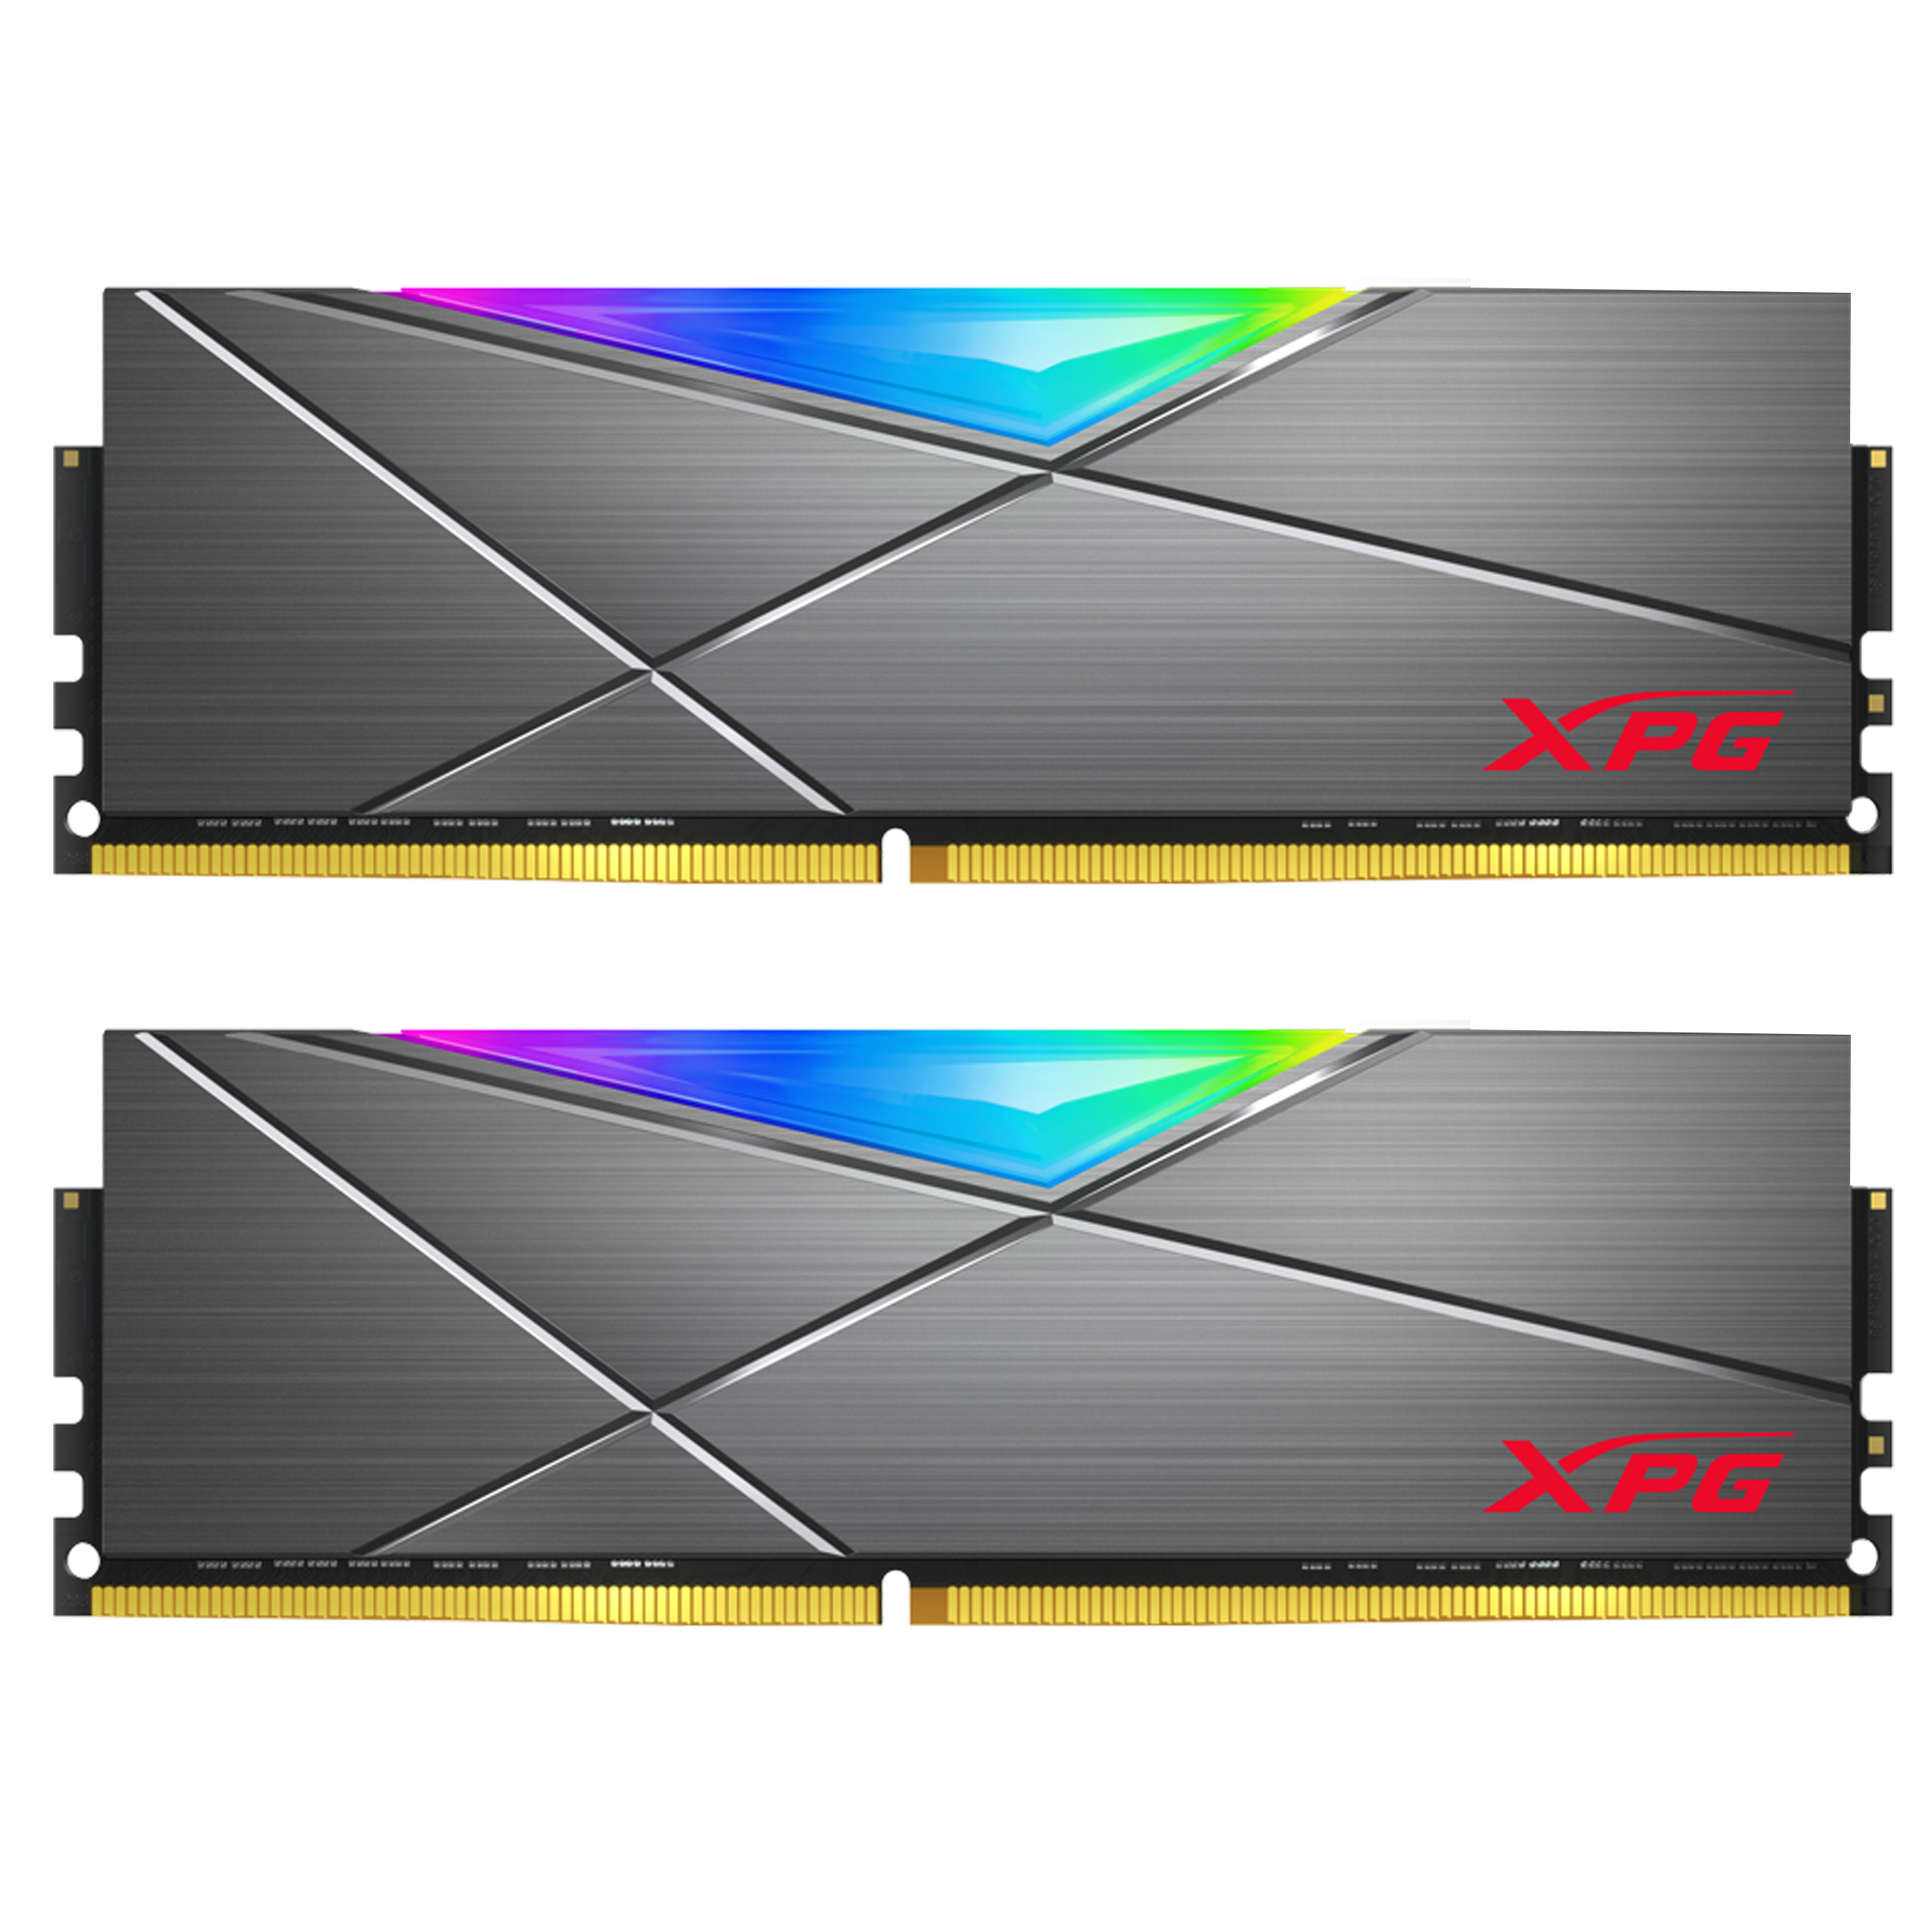 رم دسکتاپ DDR4 دو کاناله 3000 مگاهرتز CL16 ای دیتا ایکس پی جی مدل SPECTRIX D50 ظرفیت 32 گیگابایت